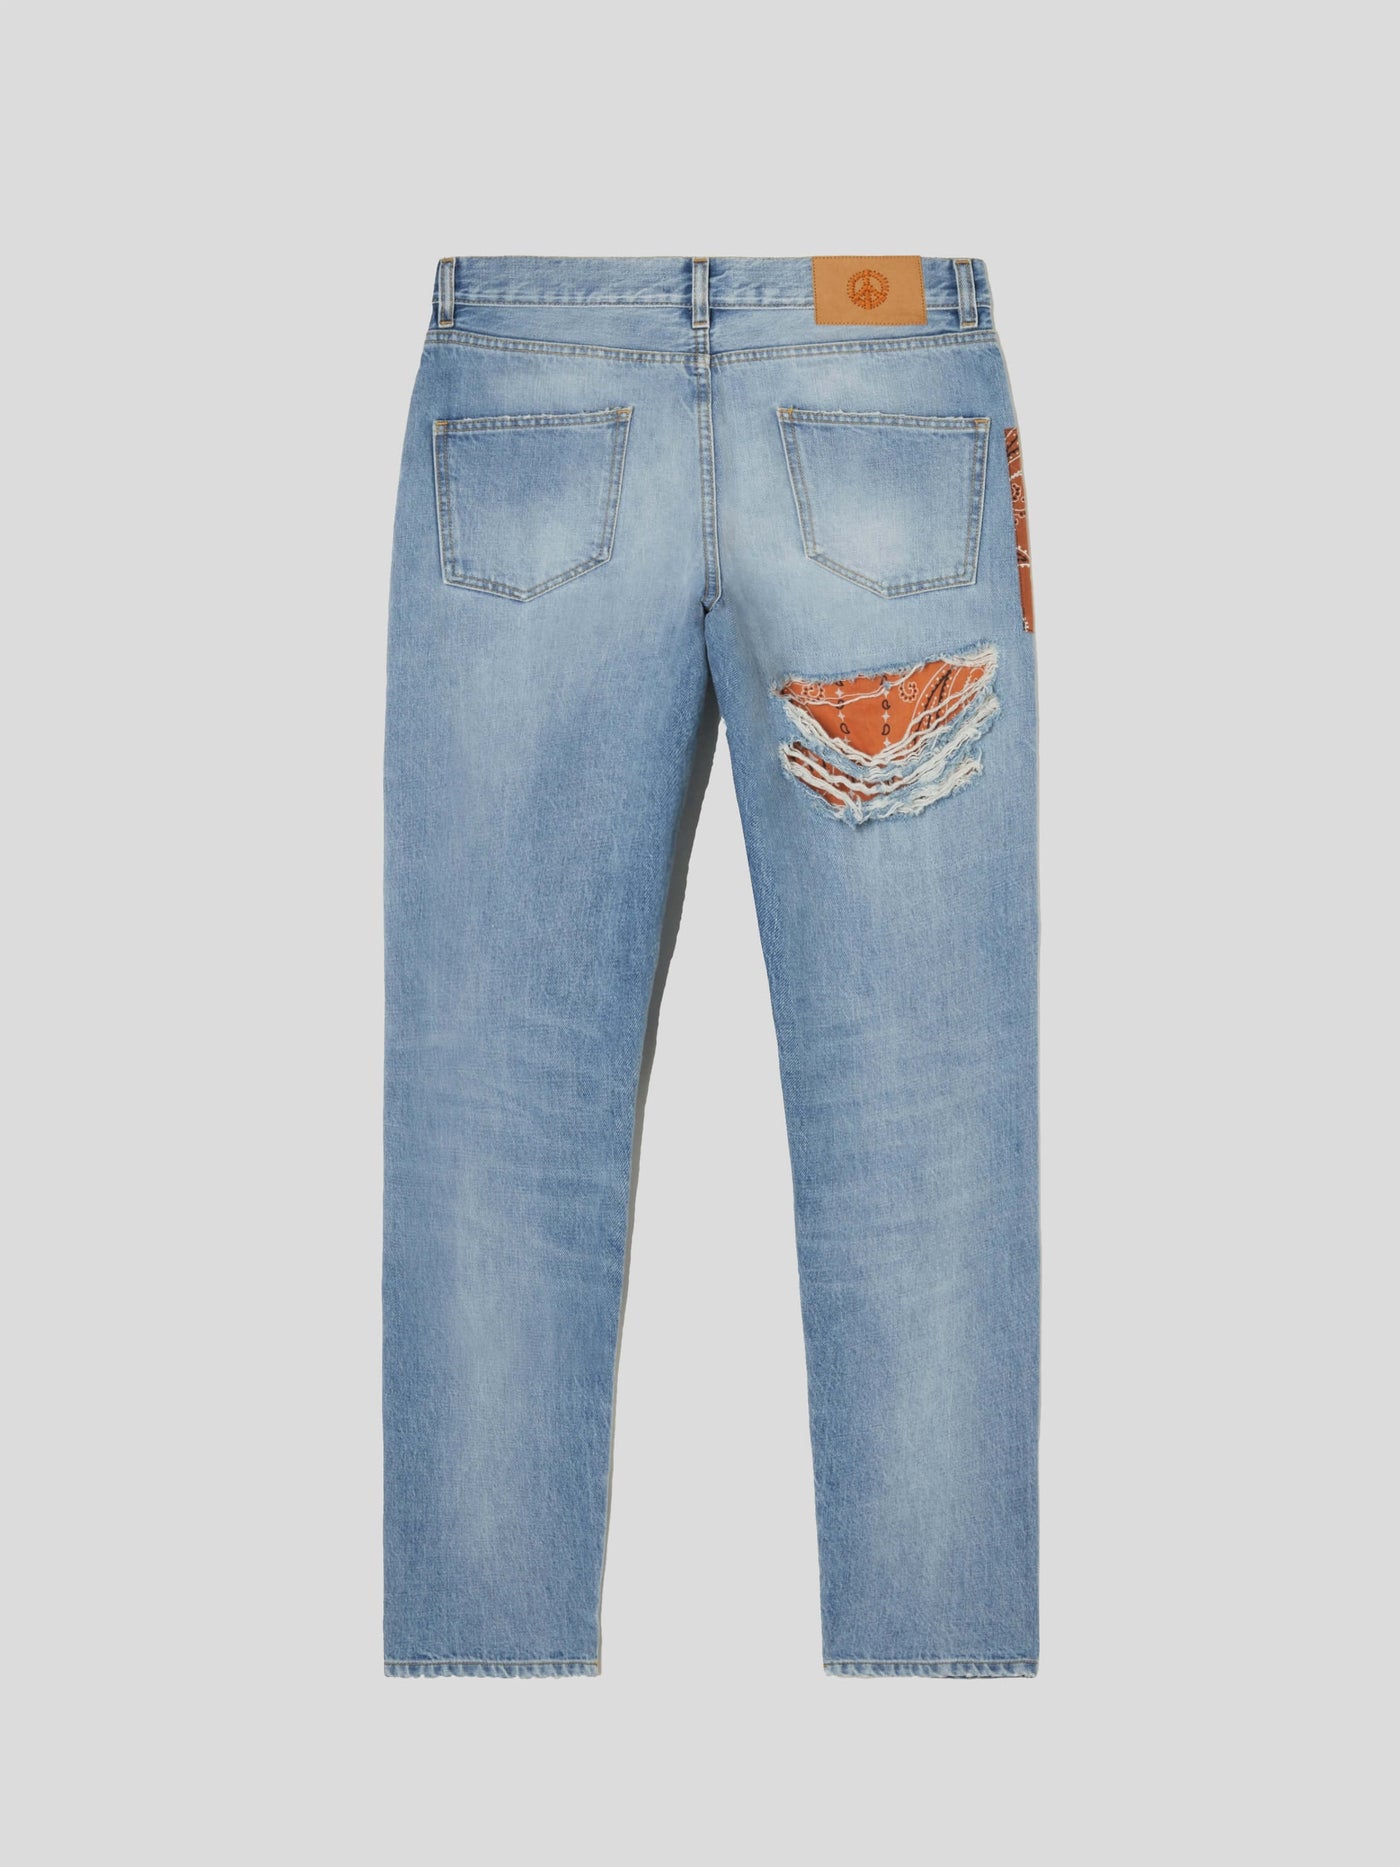 ALANUI Jeans | Denim Jeans California Patchwork | LWYB002S23DEN0014084 26 / ADAM/EVE